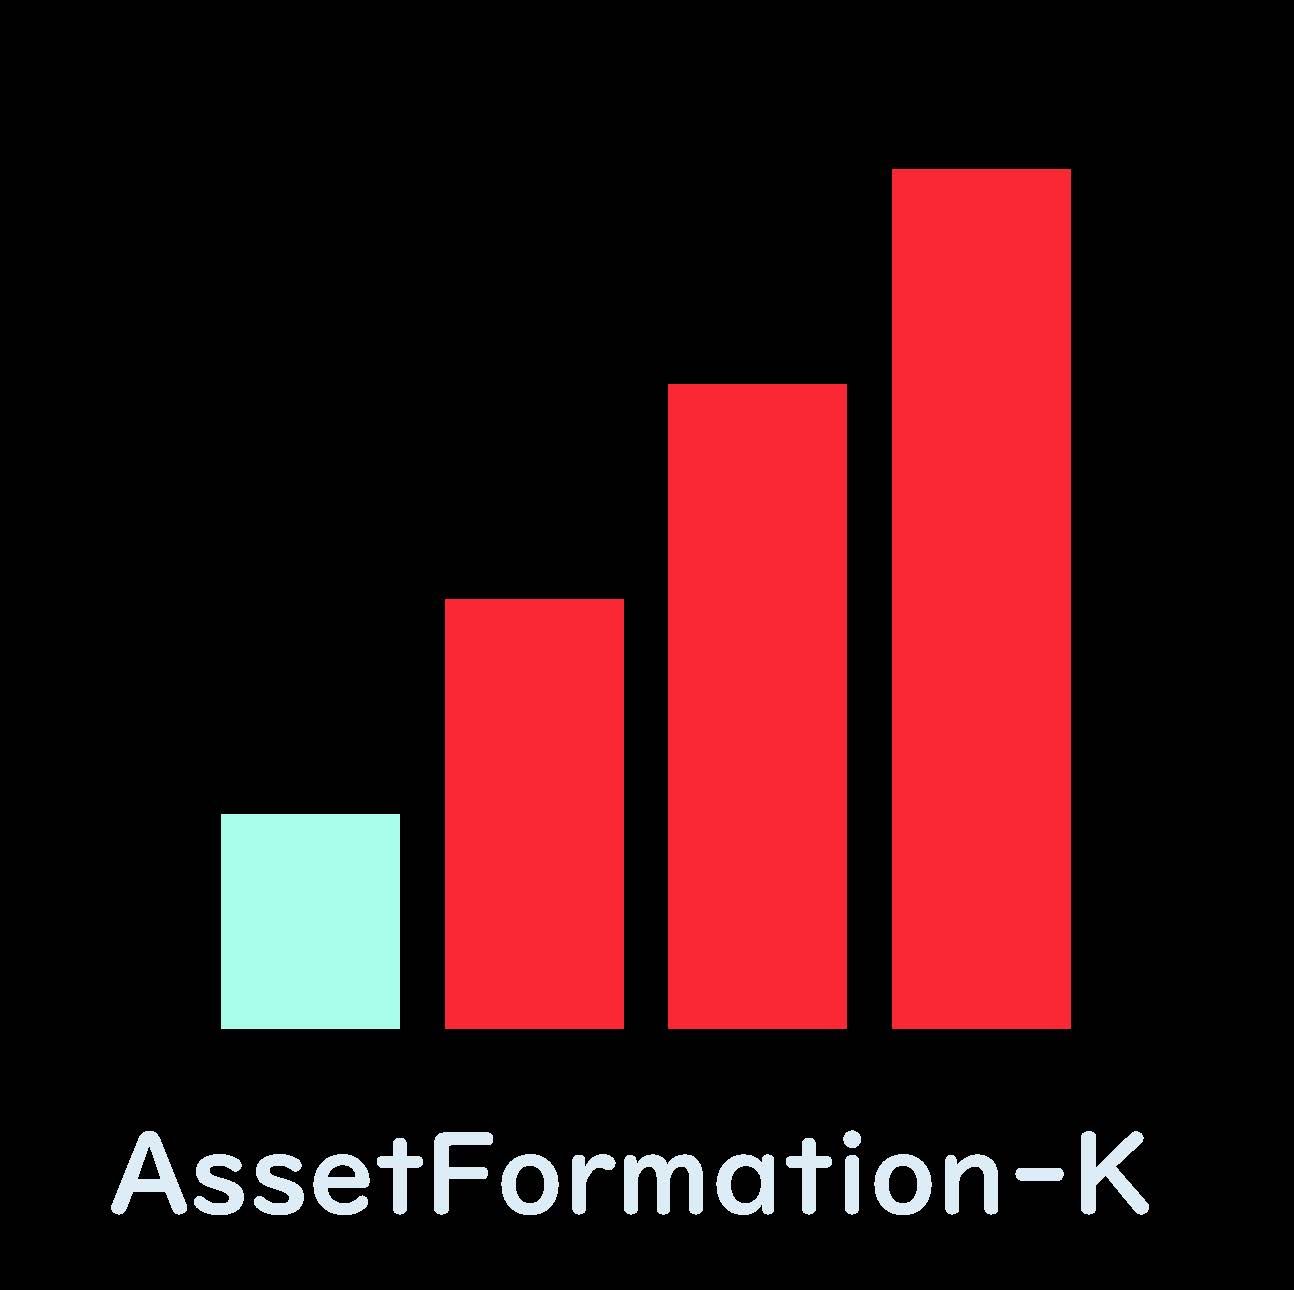 AssetFormation-K Auto Trading